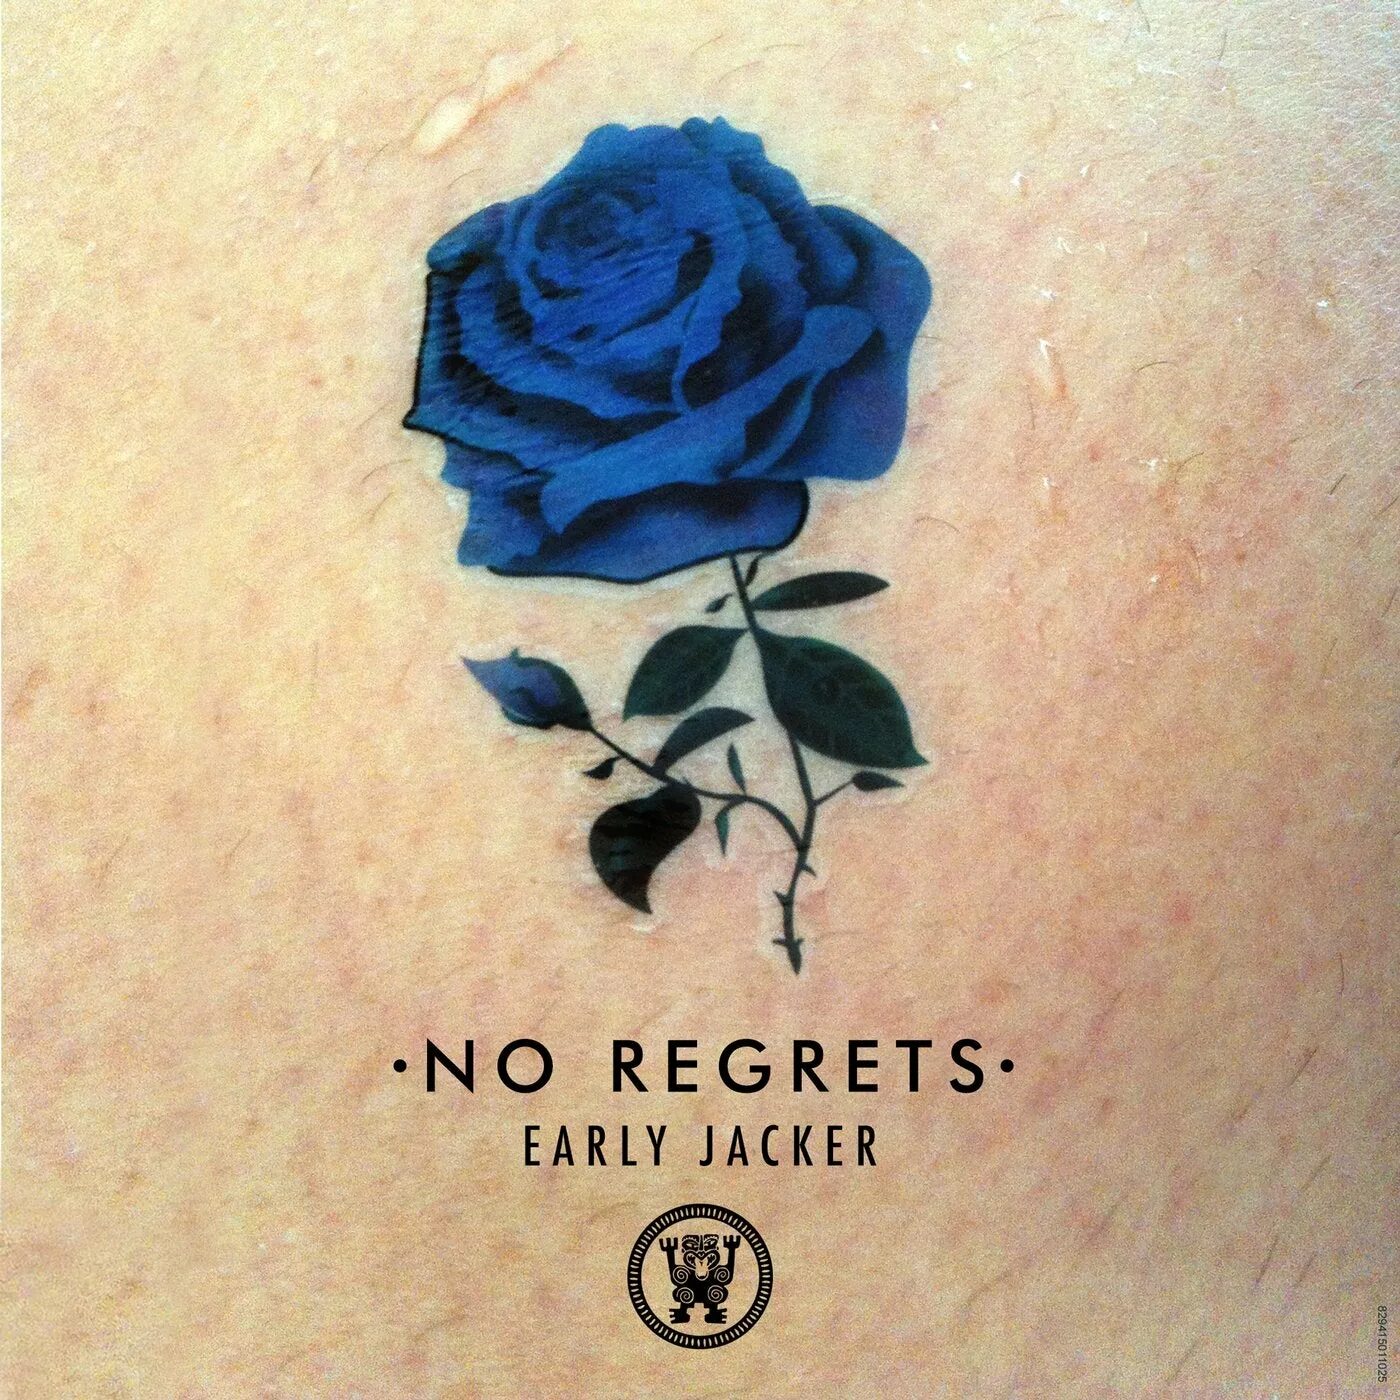 Without regretting. Regret перевод. No regrets перевод. No regrets надпись. No regrets (1975).